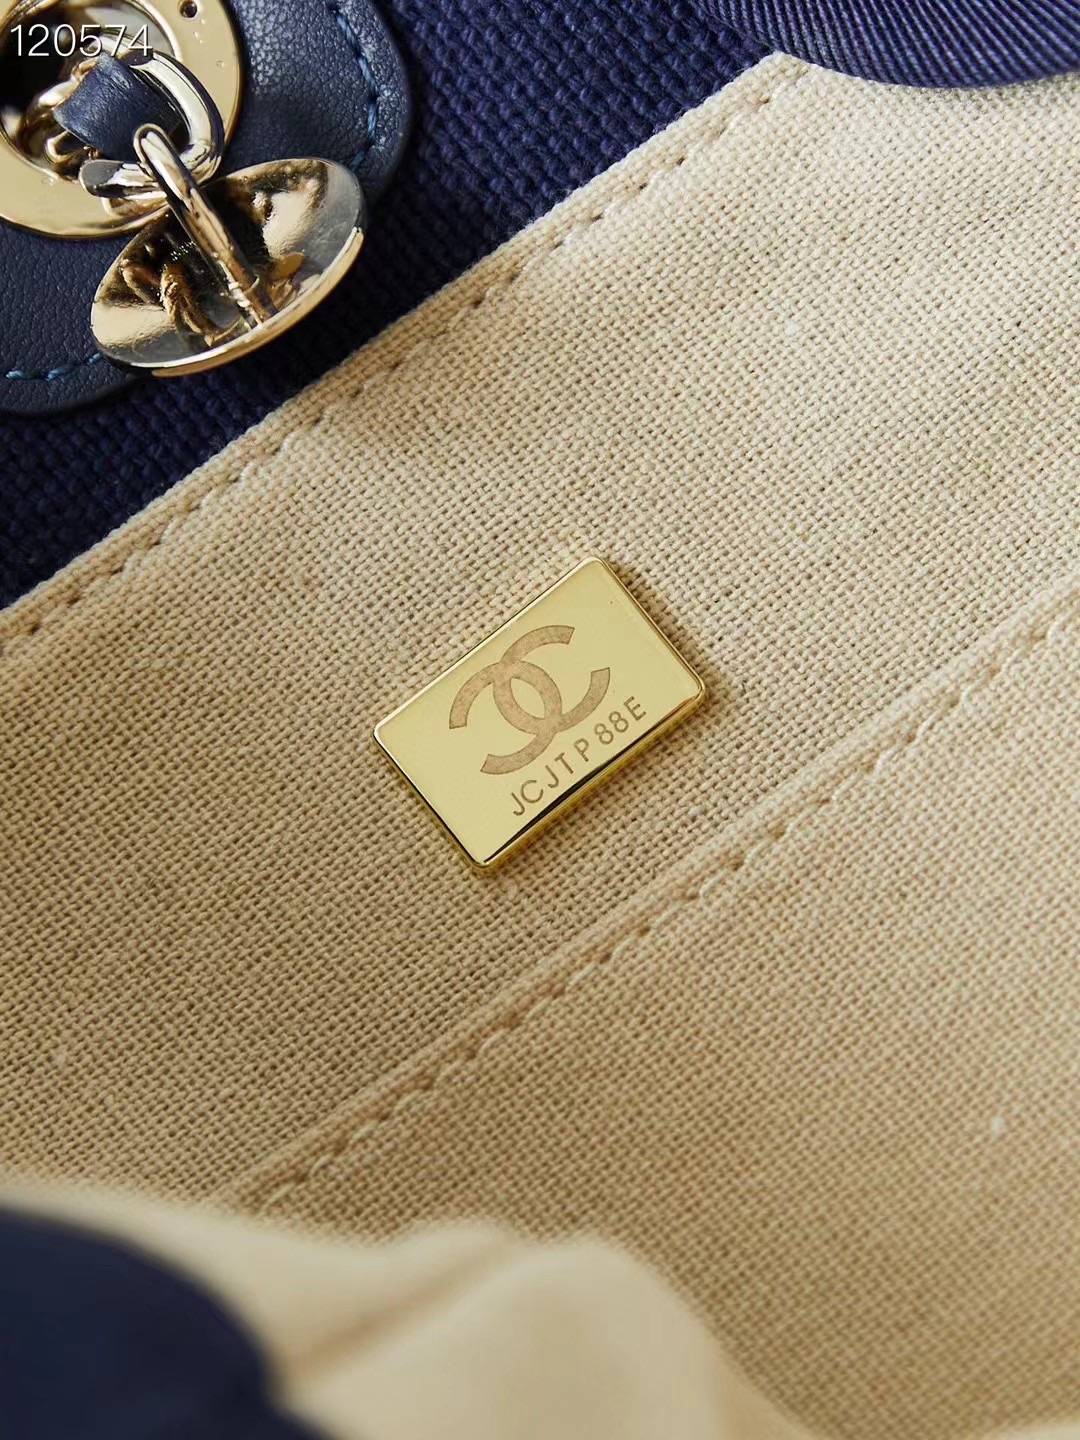 Chanel SHOPPING BAG AS3257 Blue